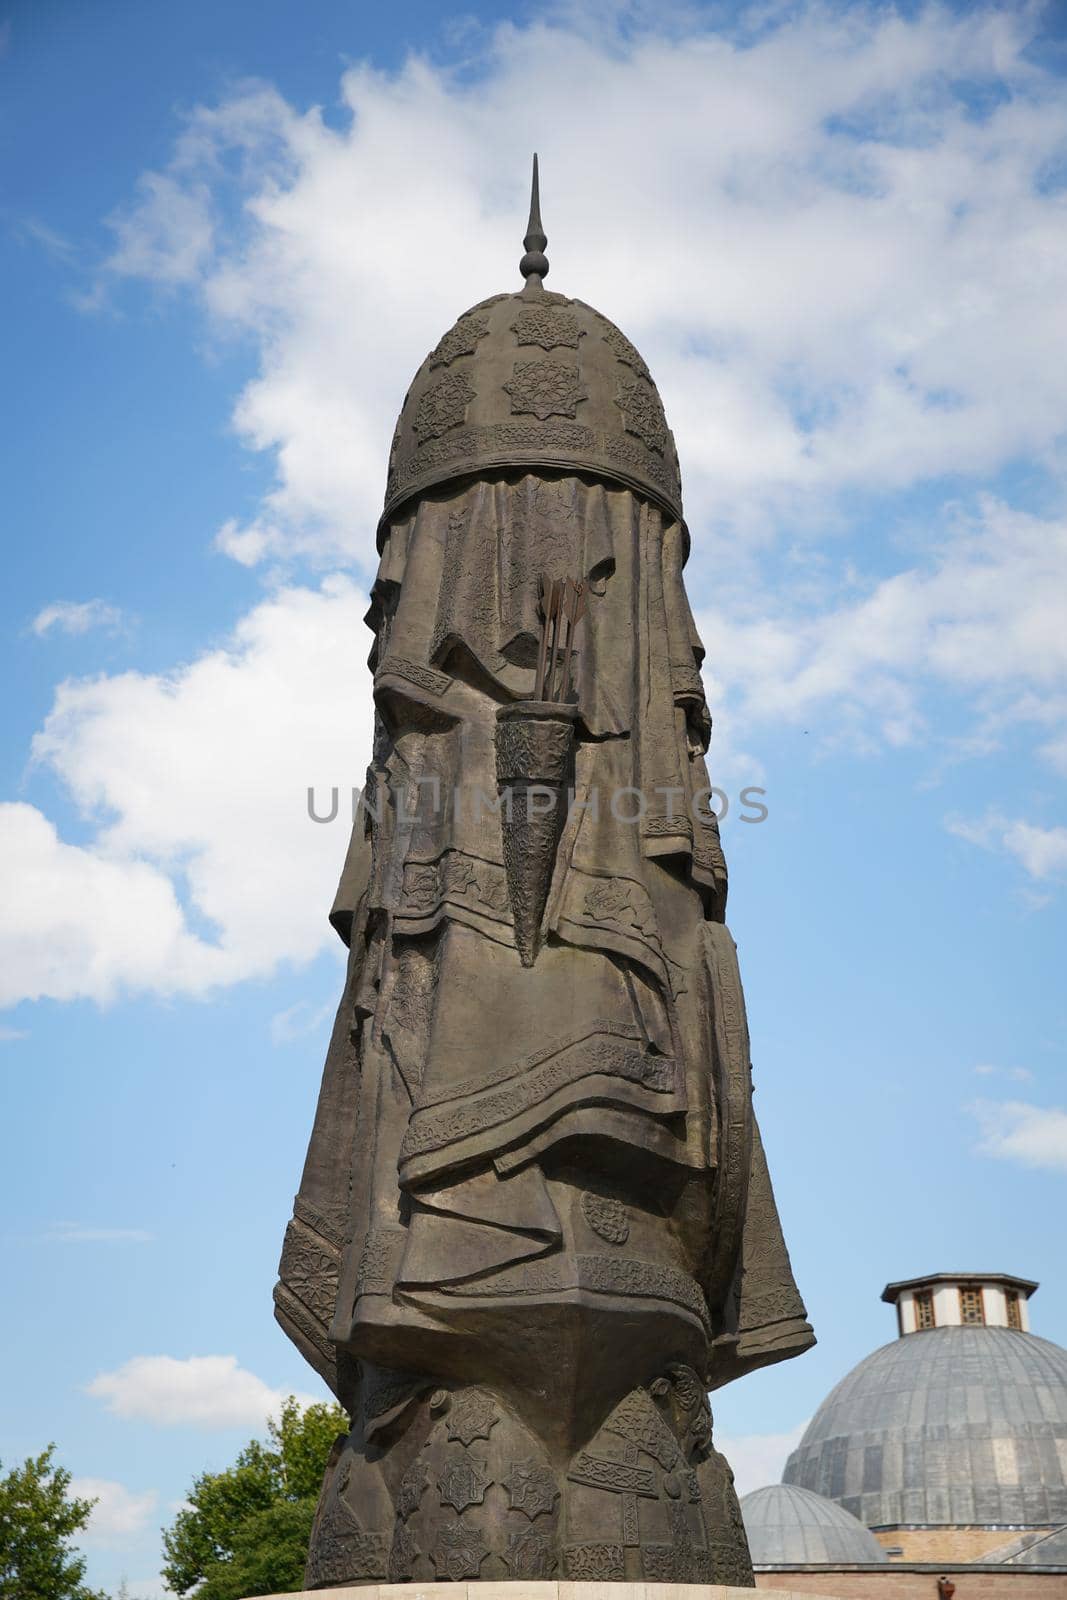 Seljuk Statue in Konya City Square, Konya, Turkiye by EvrenKalinbacak